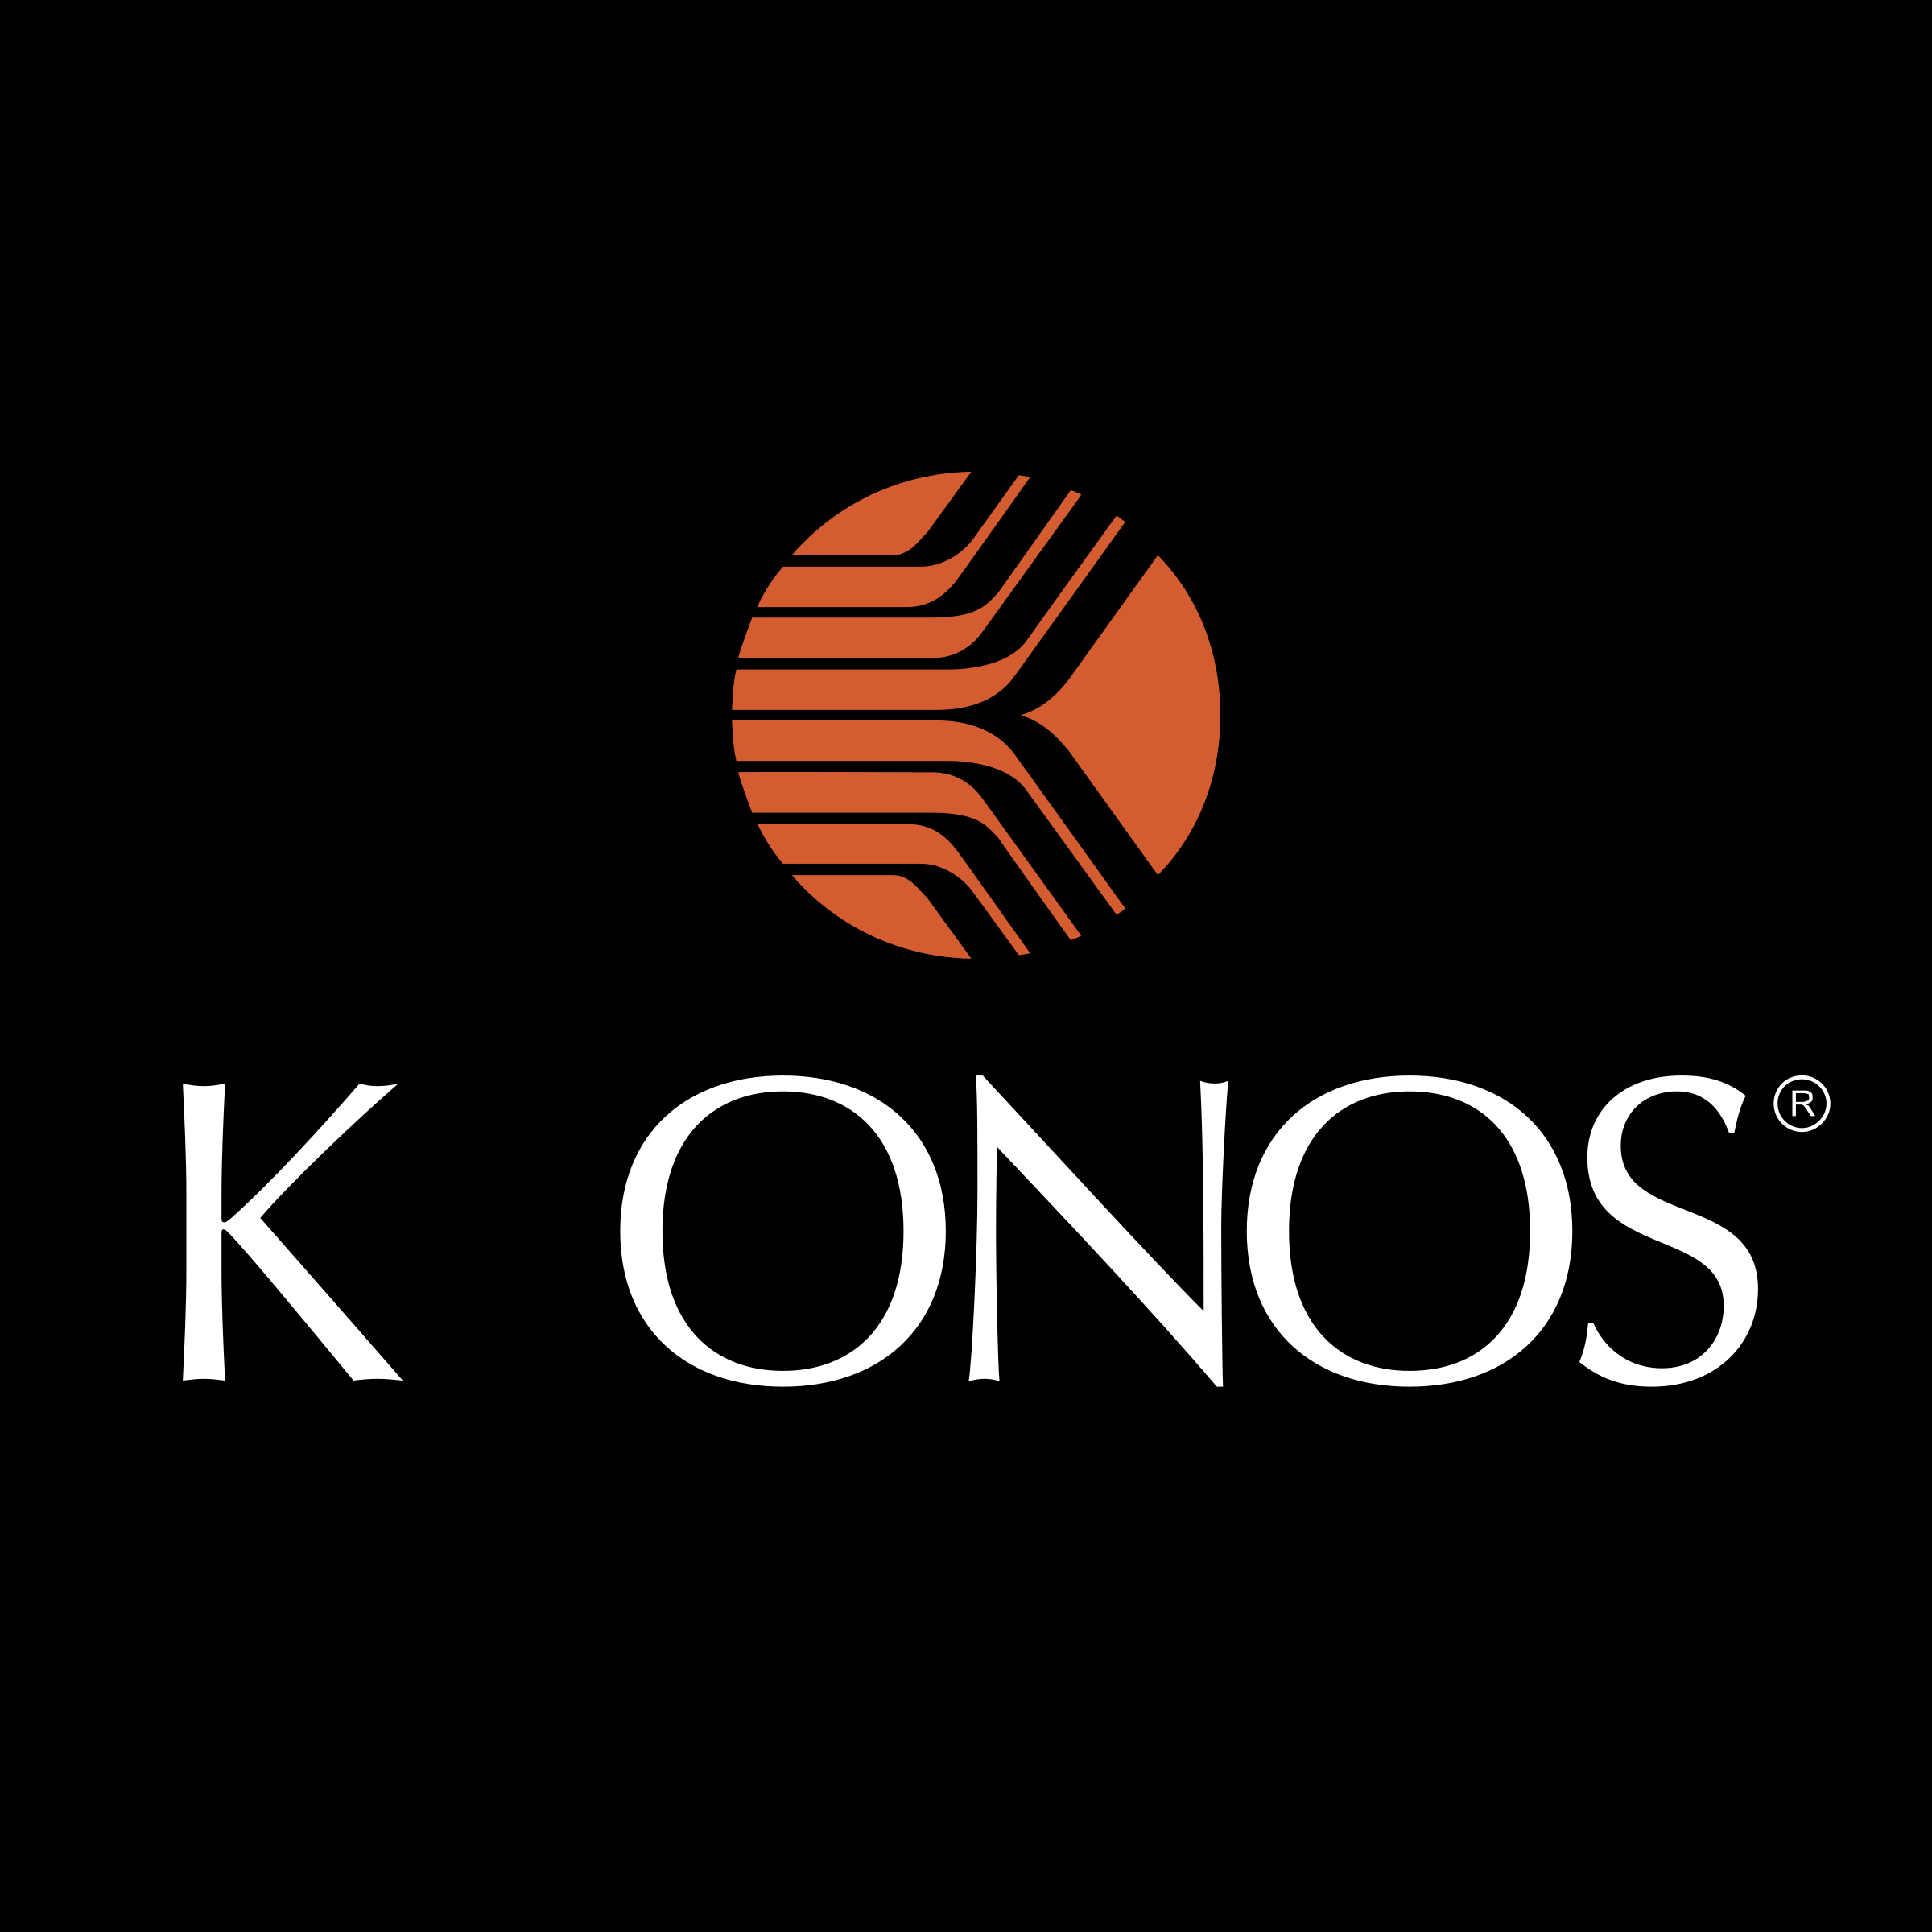 Kronos Logo - Kronos Logo PNG Transparent & SVG Vector - Freebie Supply